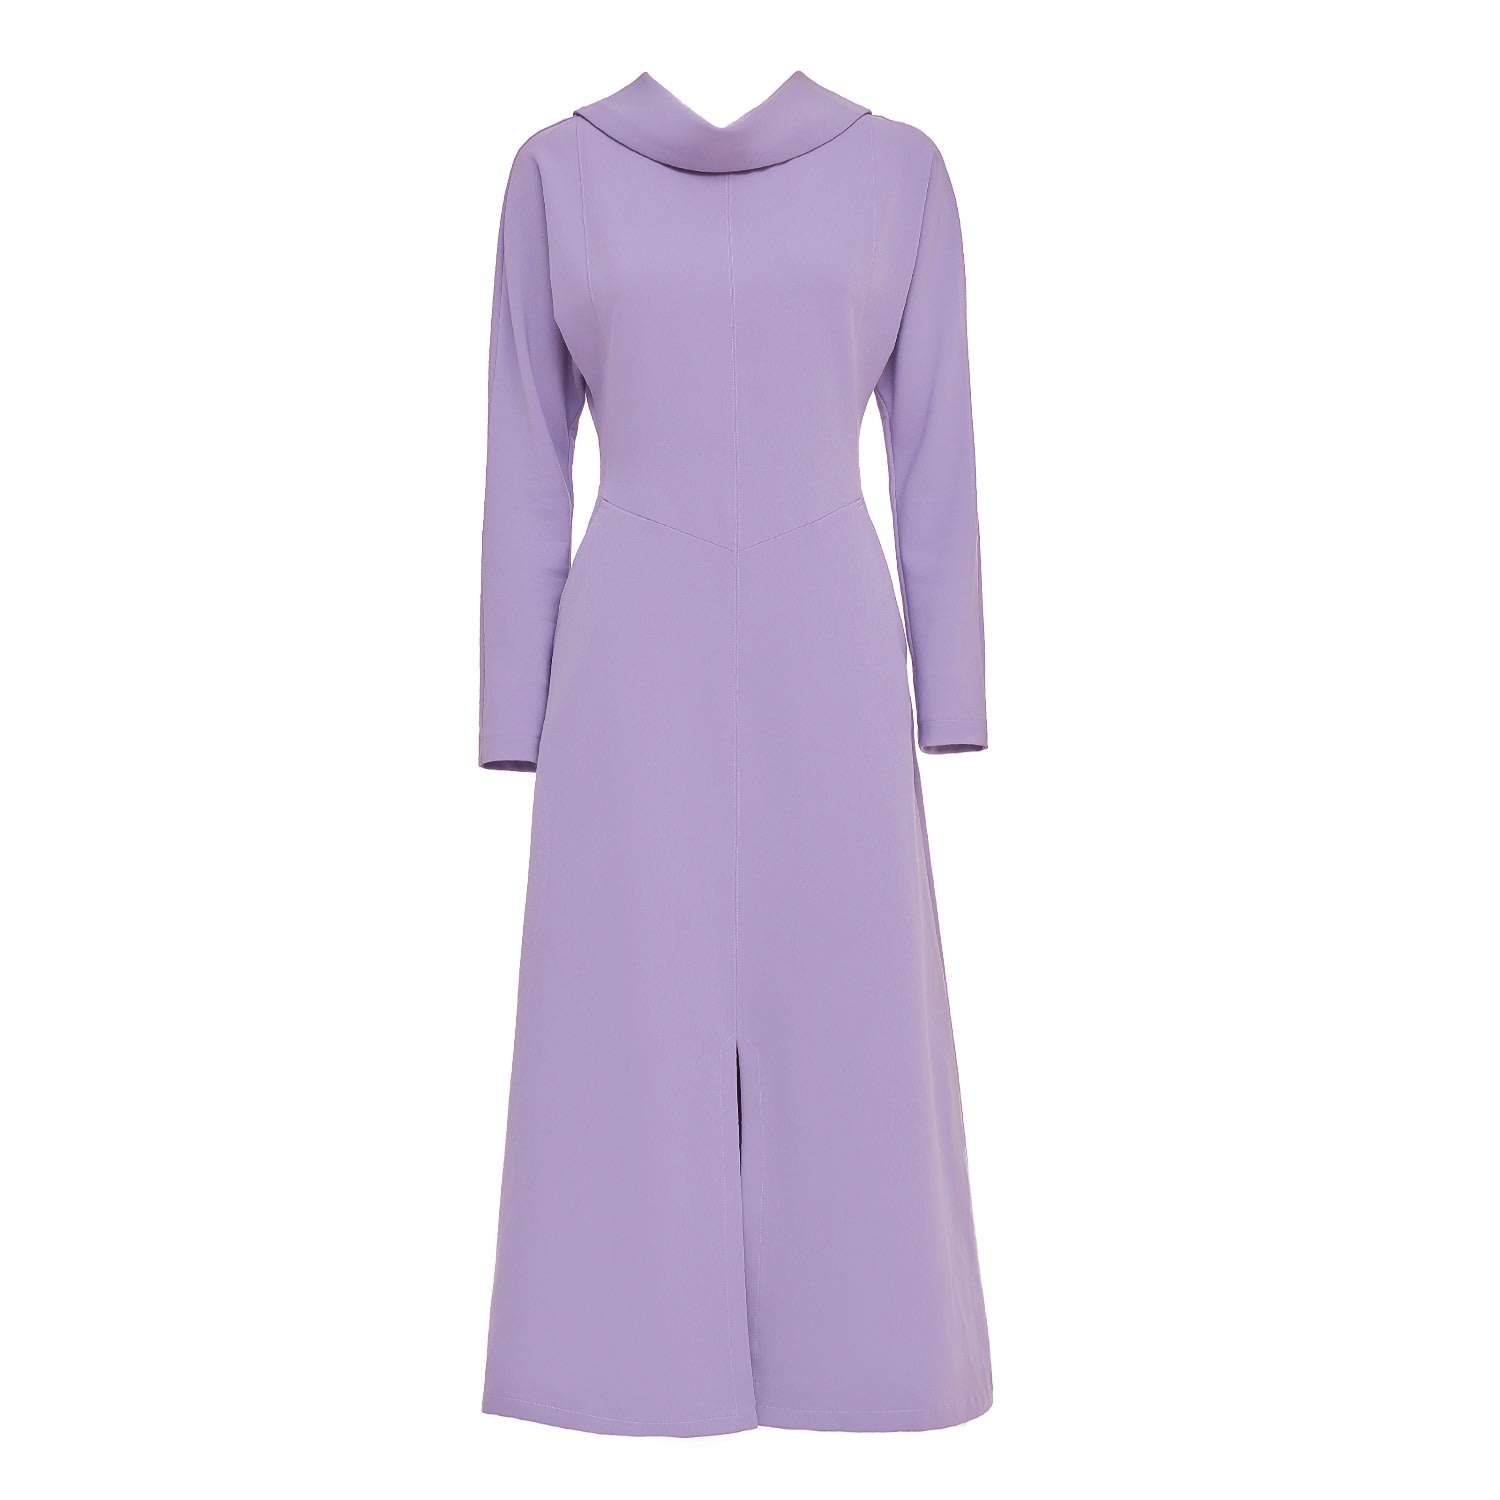 Women’s Pink / Purple Elegant Fitted Dress With A Flared Skirt Lavander Medium Julia Allert